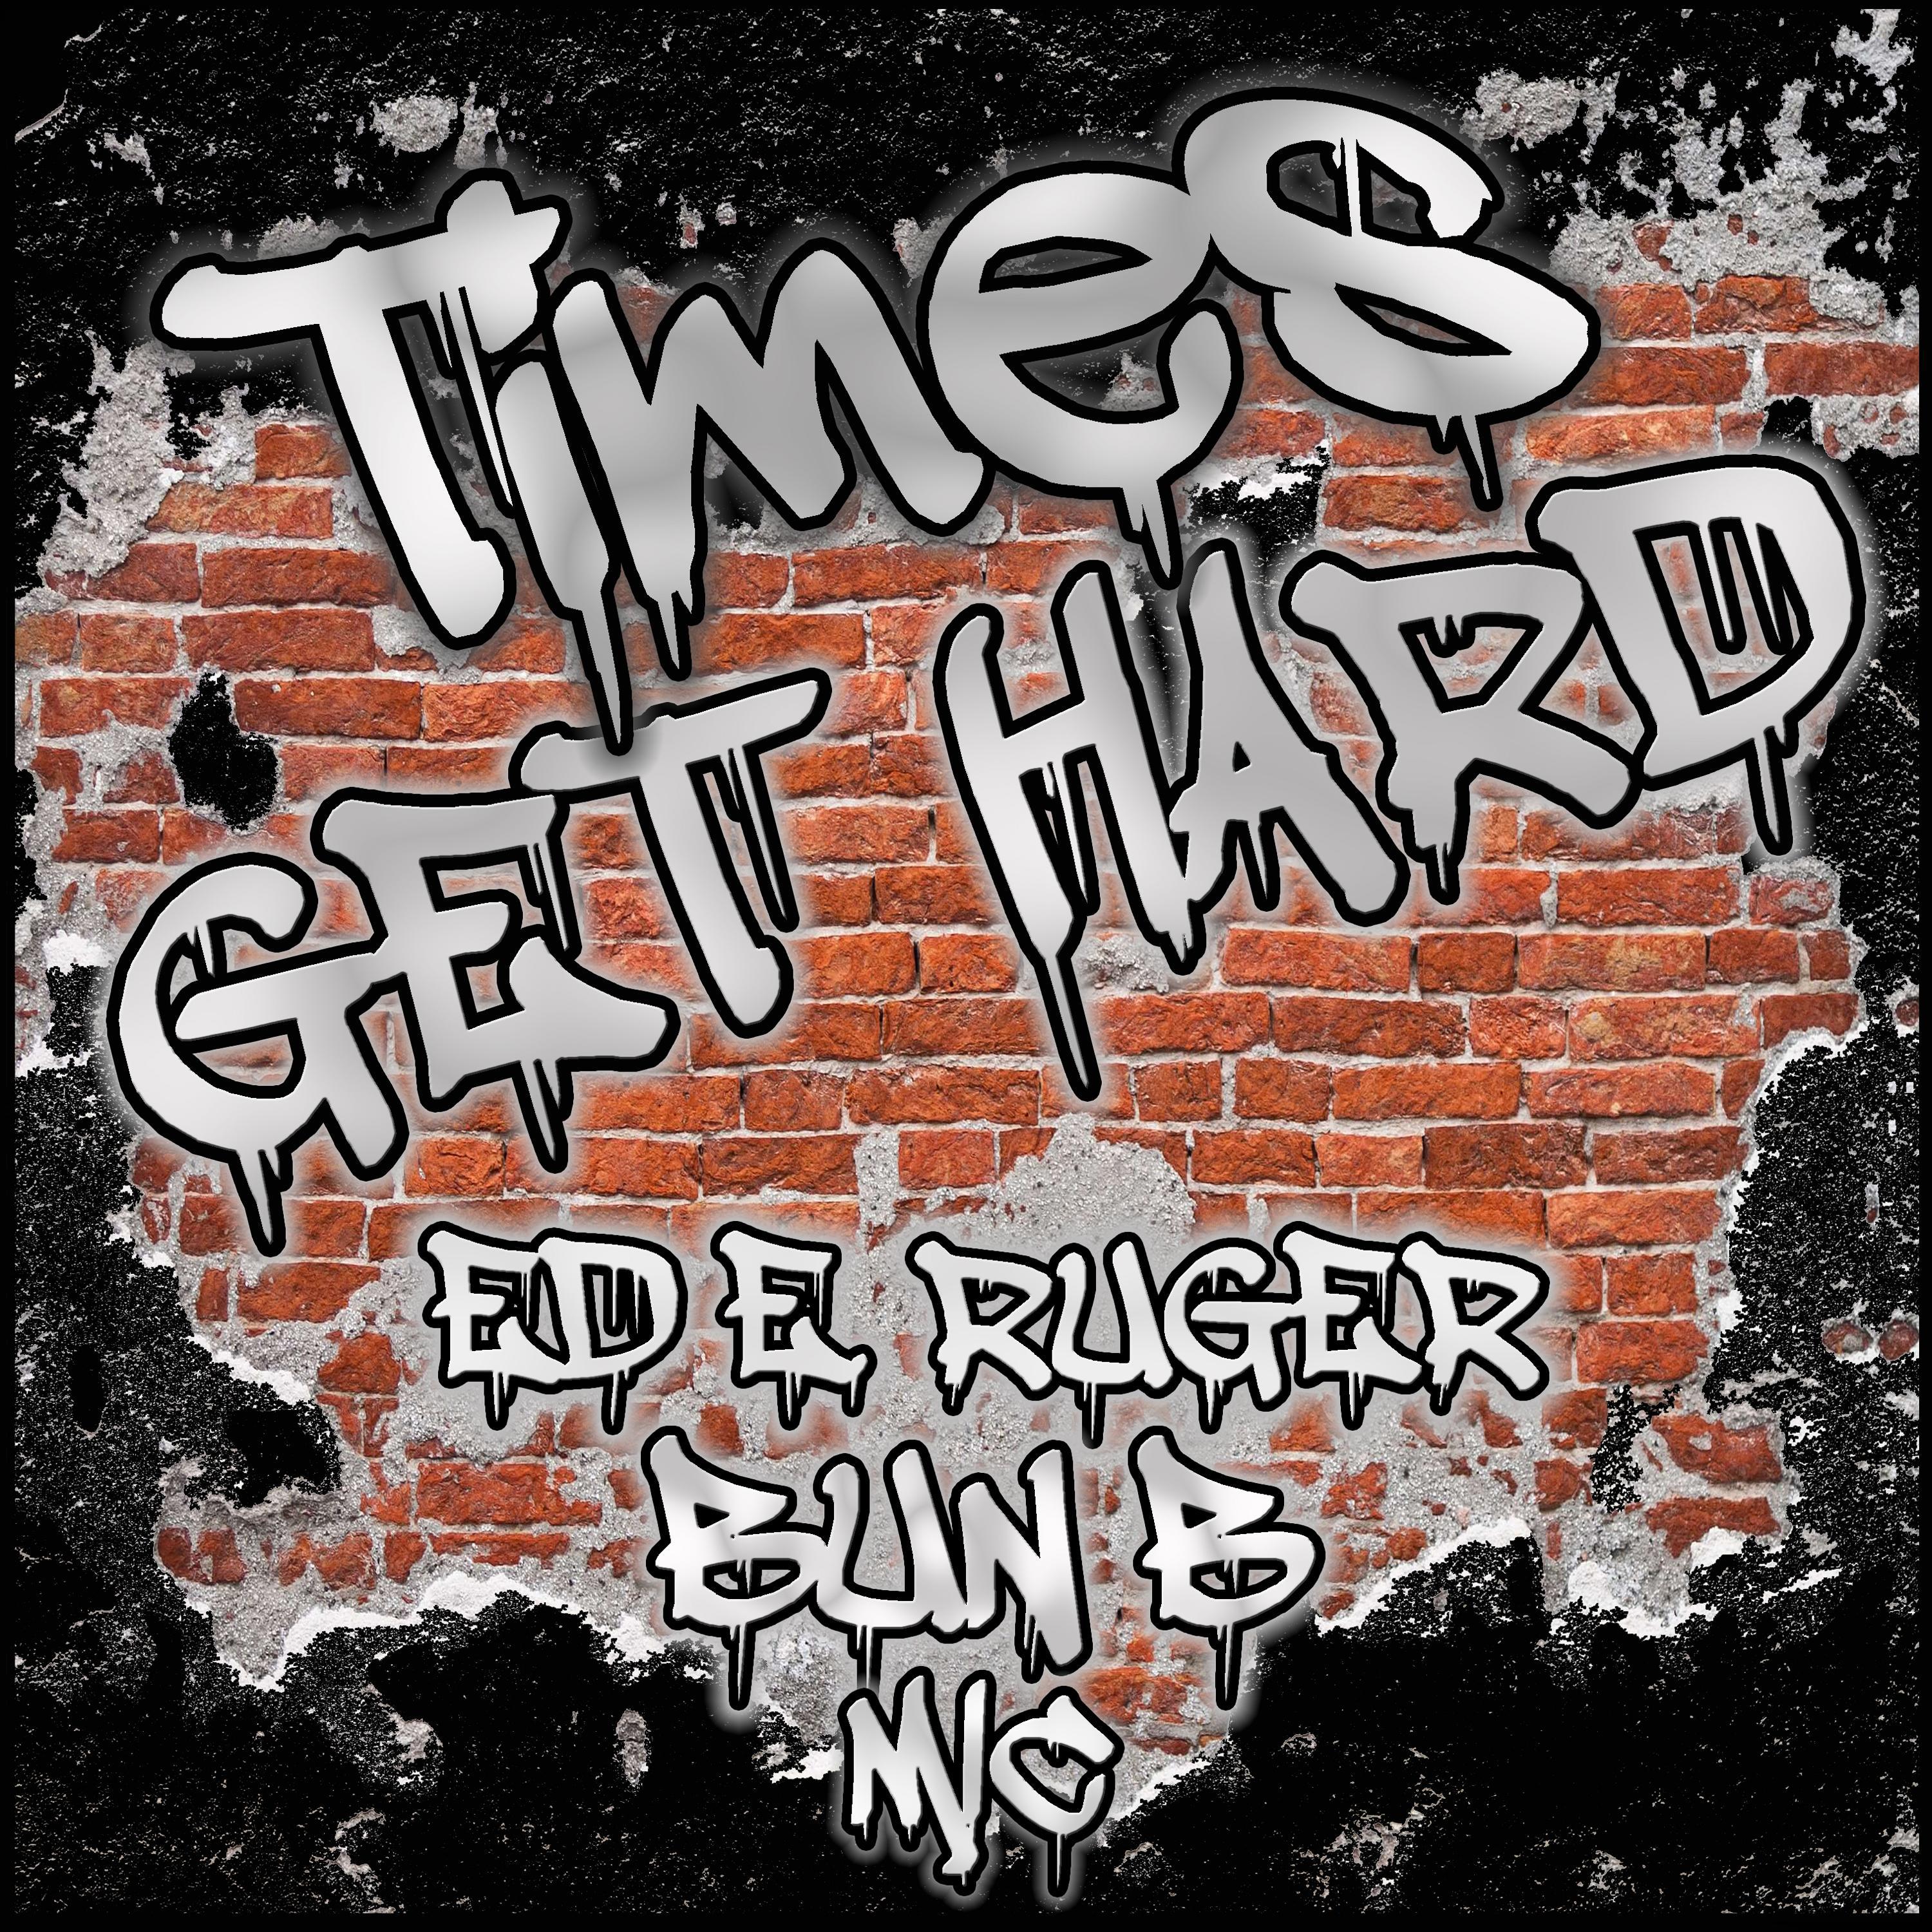 Ed E. Ruger - Times Get Hard ft Bun B (feat. Bun B & MIC)